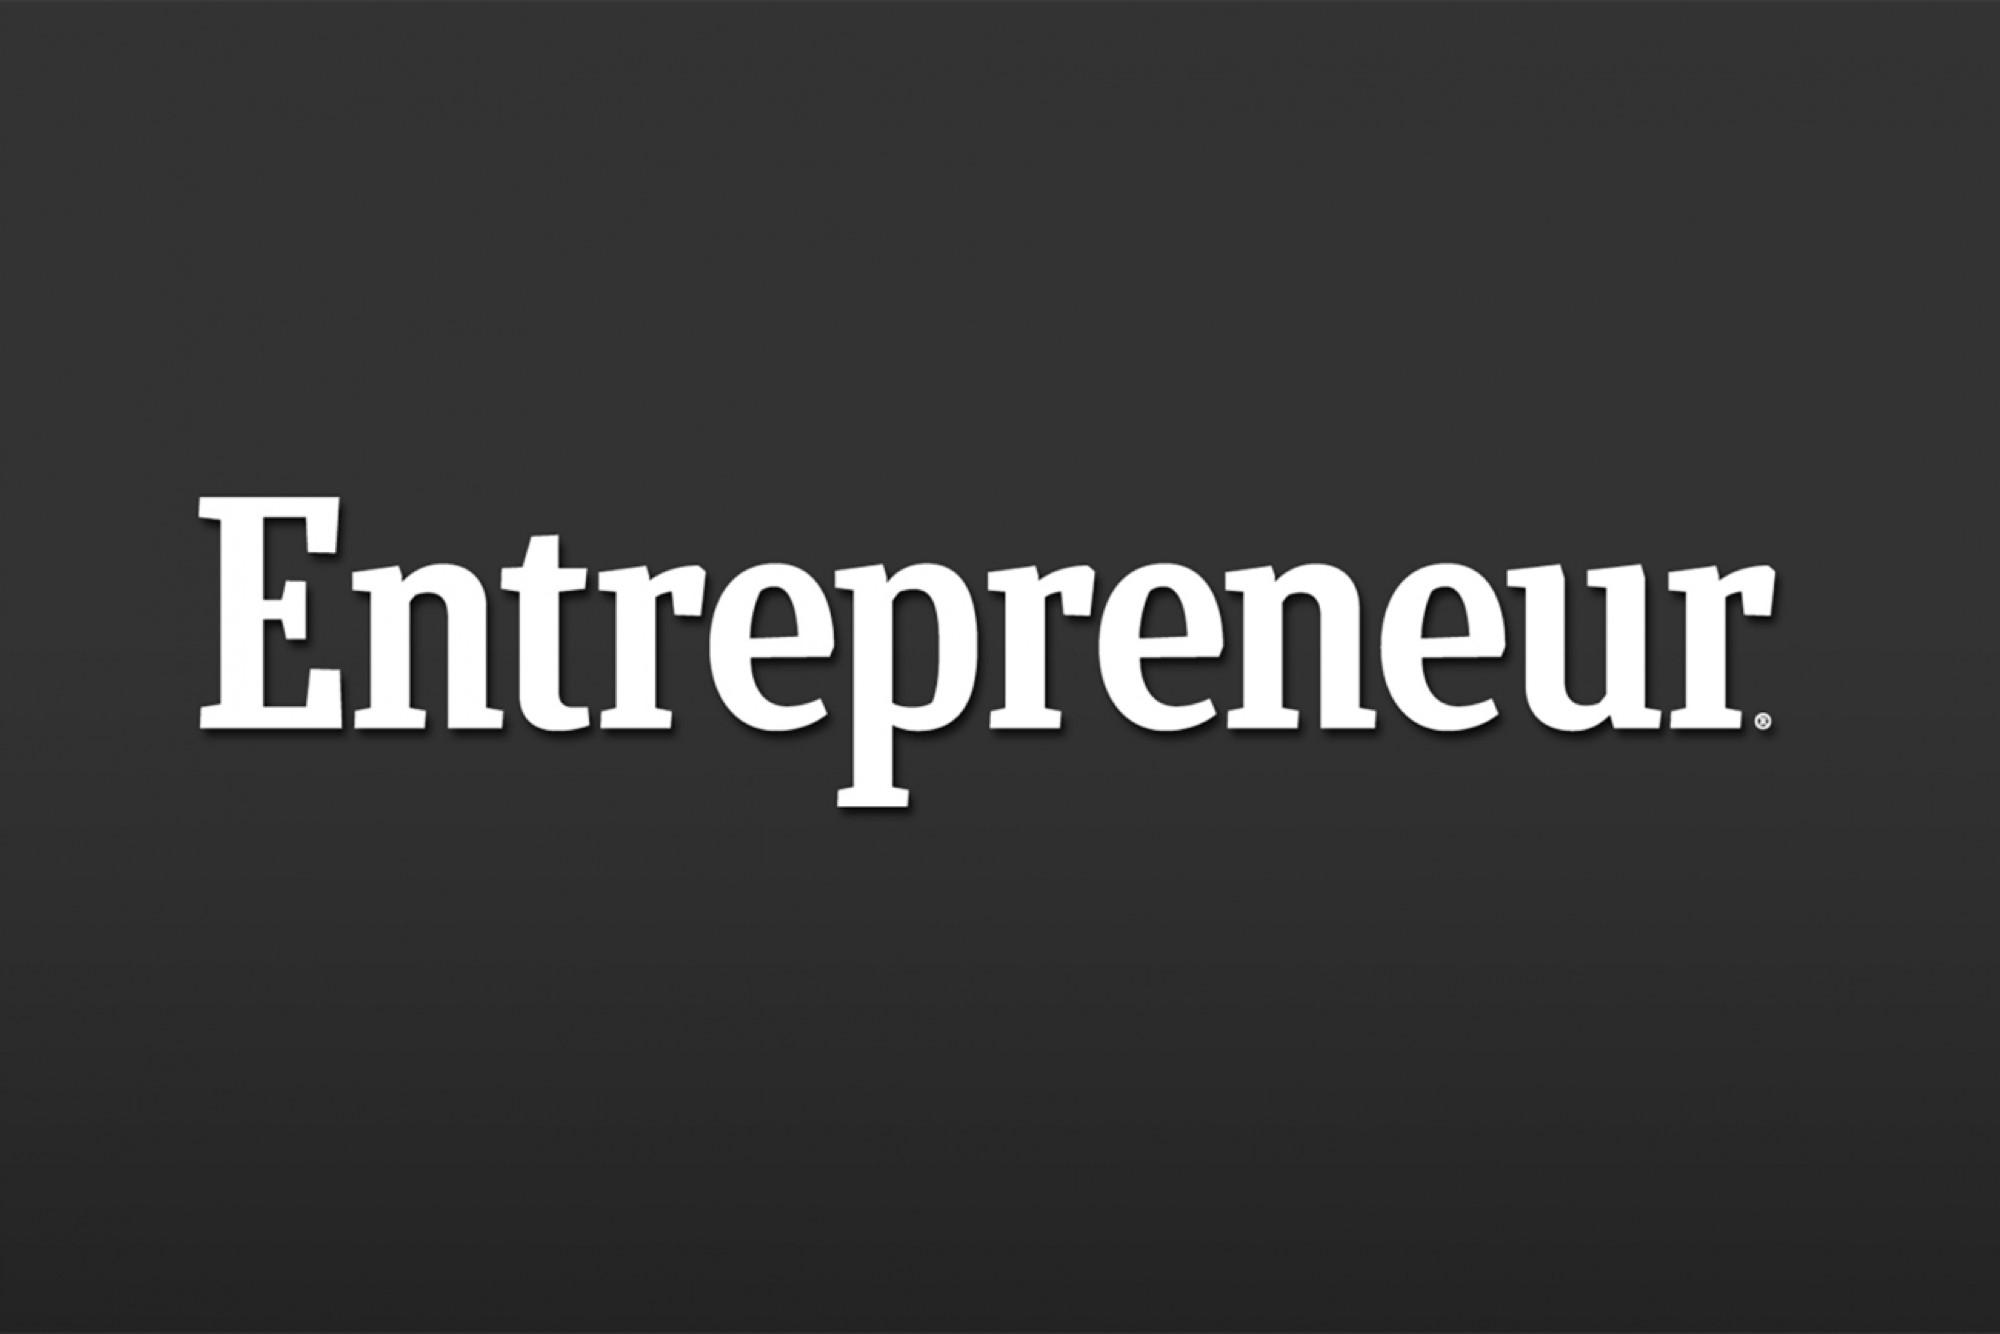 Entrepreneur.com black and white logo